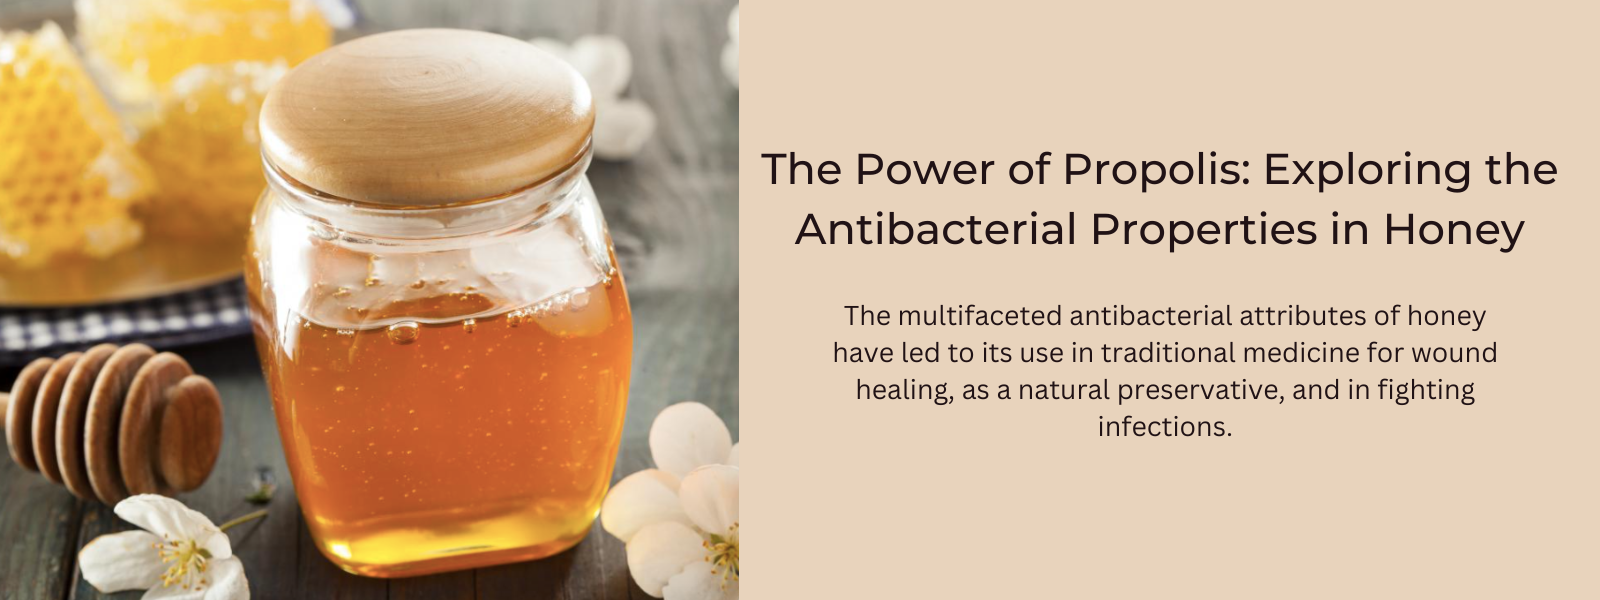 The Power of Propolis: Exploring the Antibacterial Properties in Honey